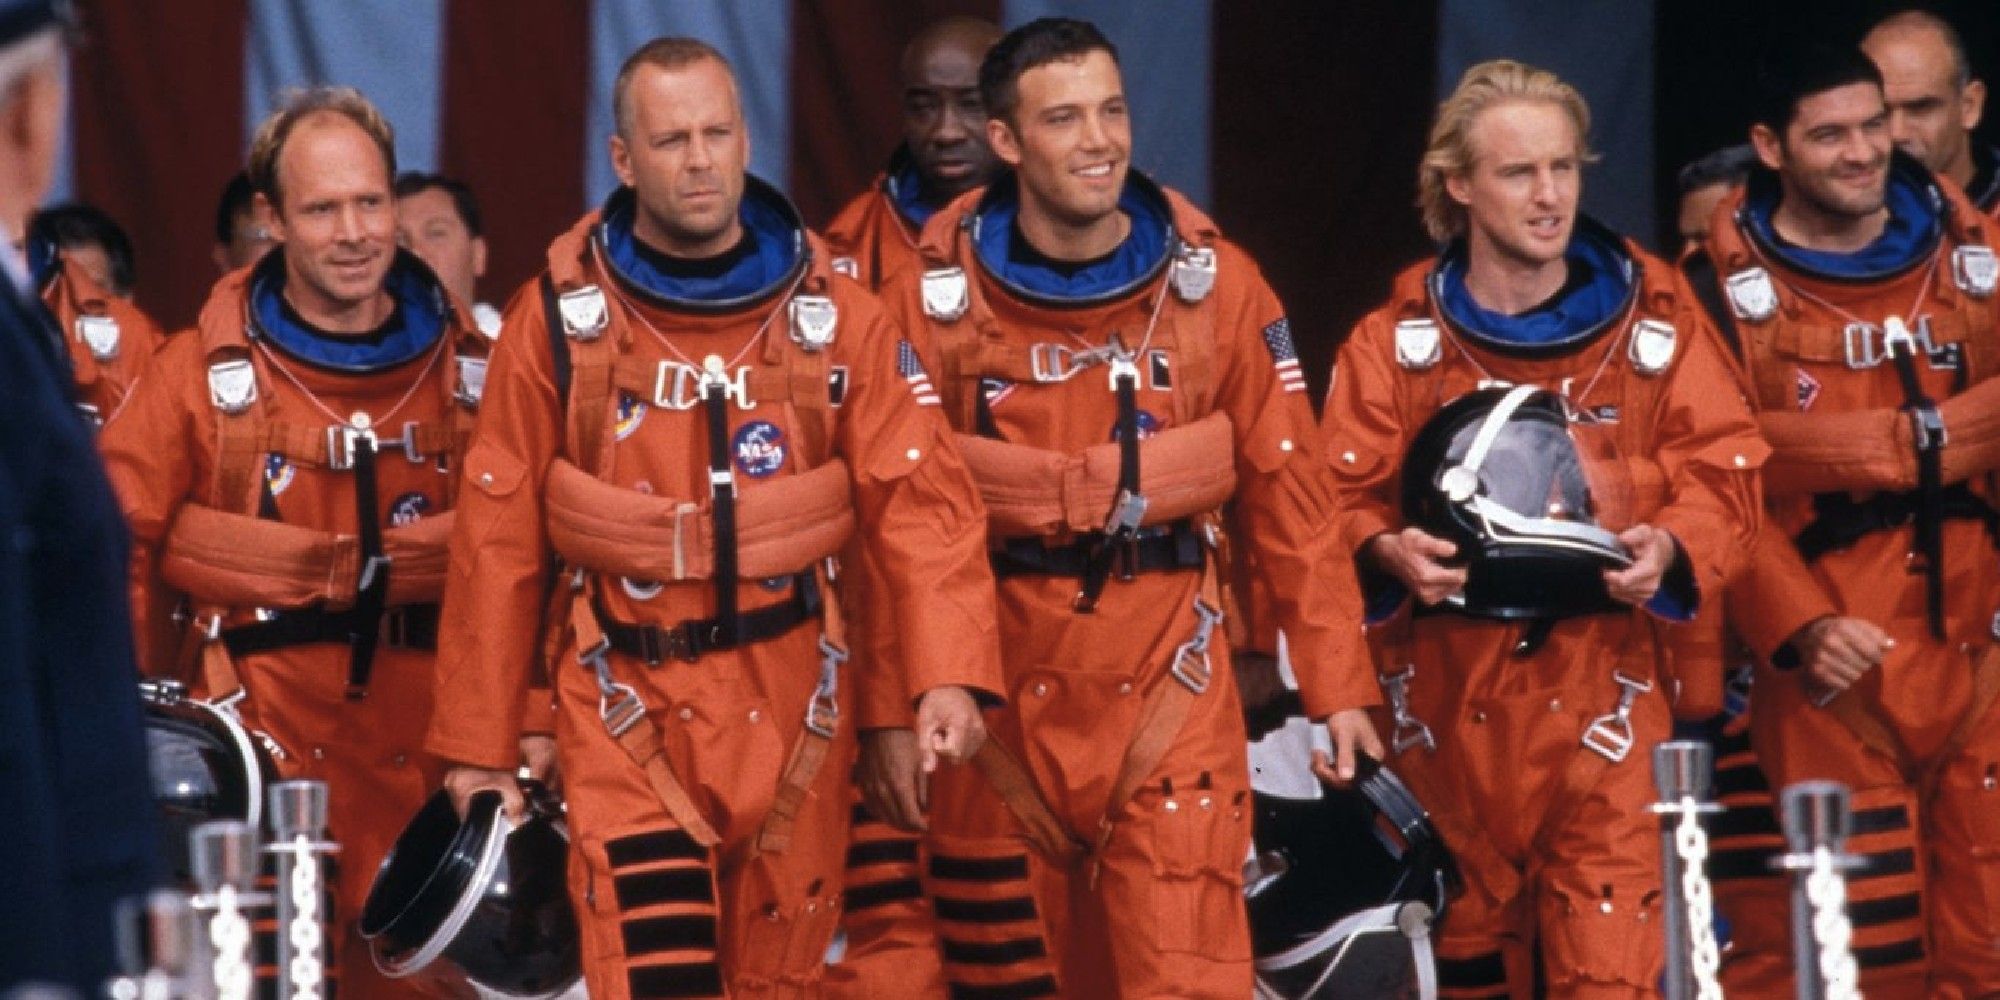 Astronaut crew walking together